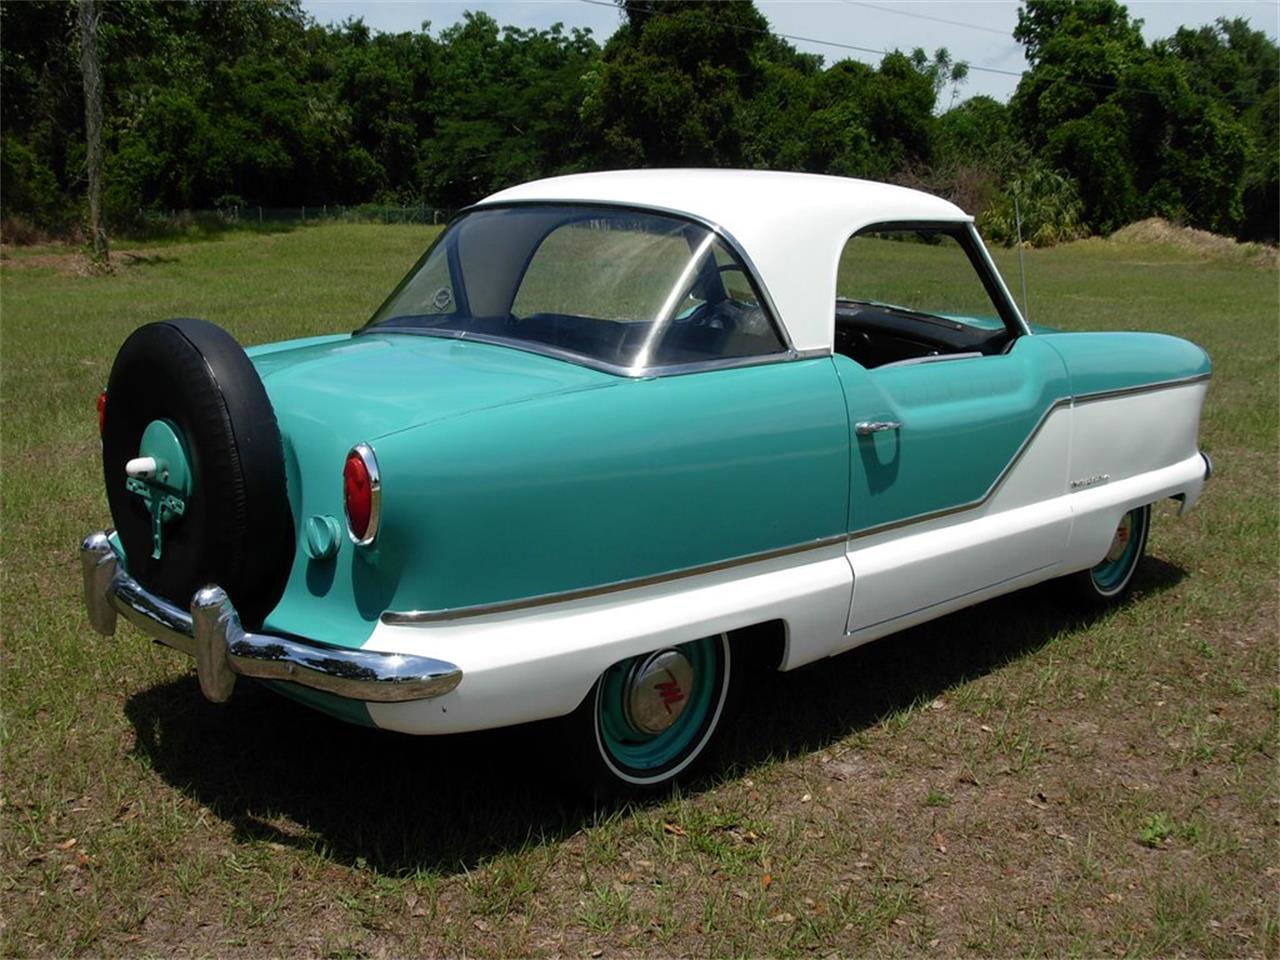 1959 Nash Metropolitan for sale in Palmetto, FL ...